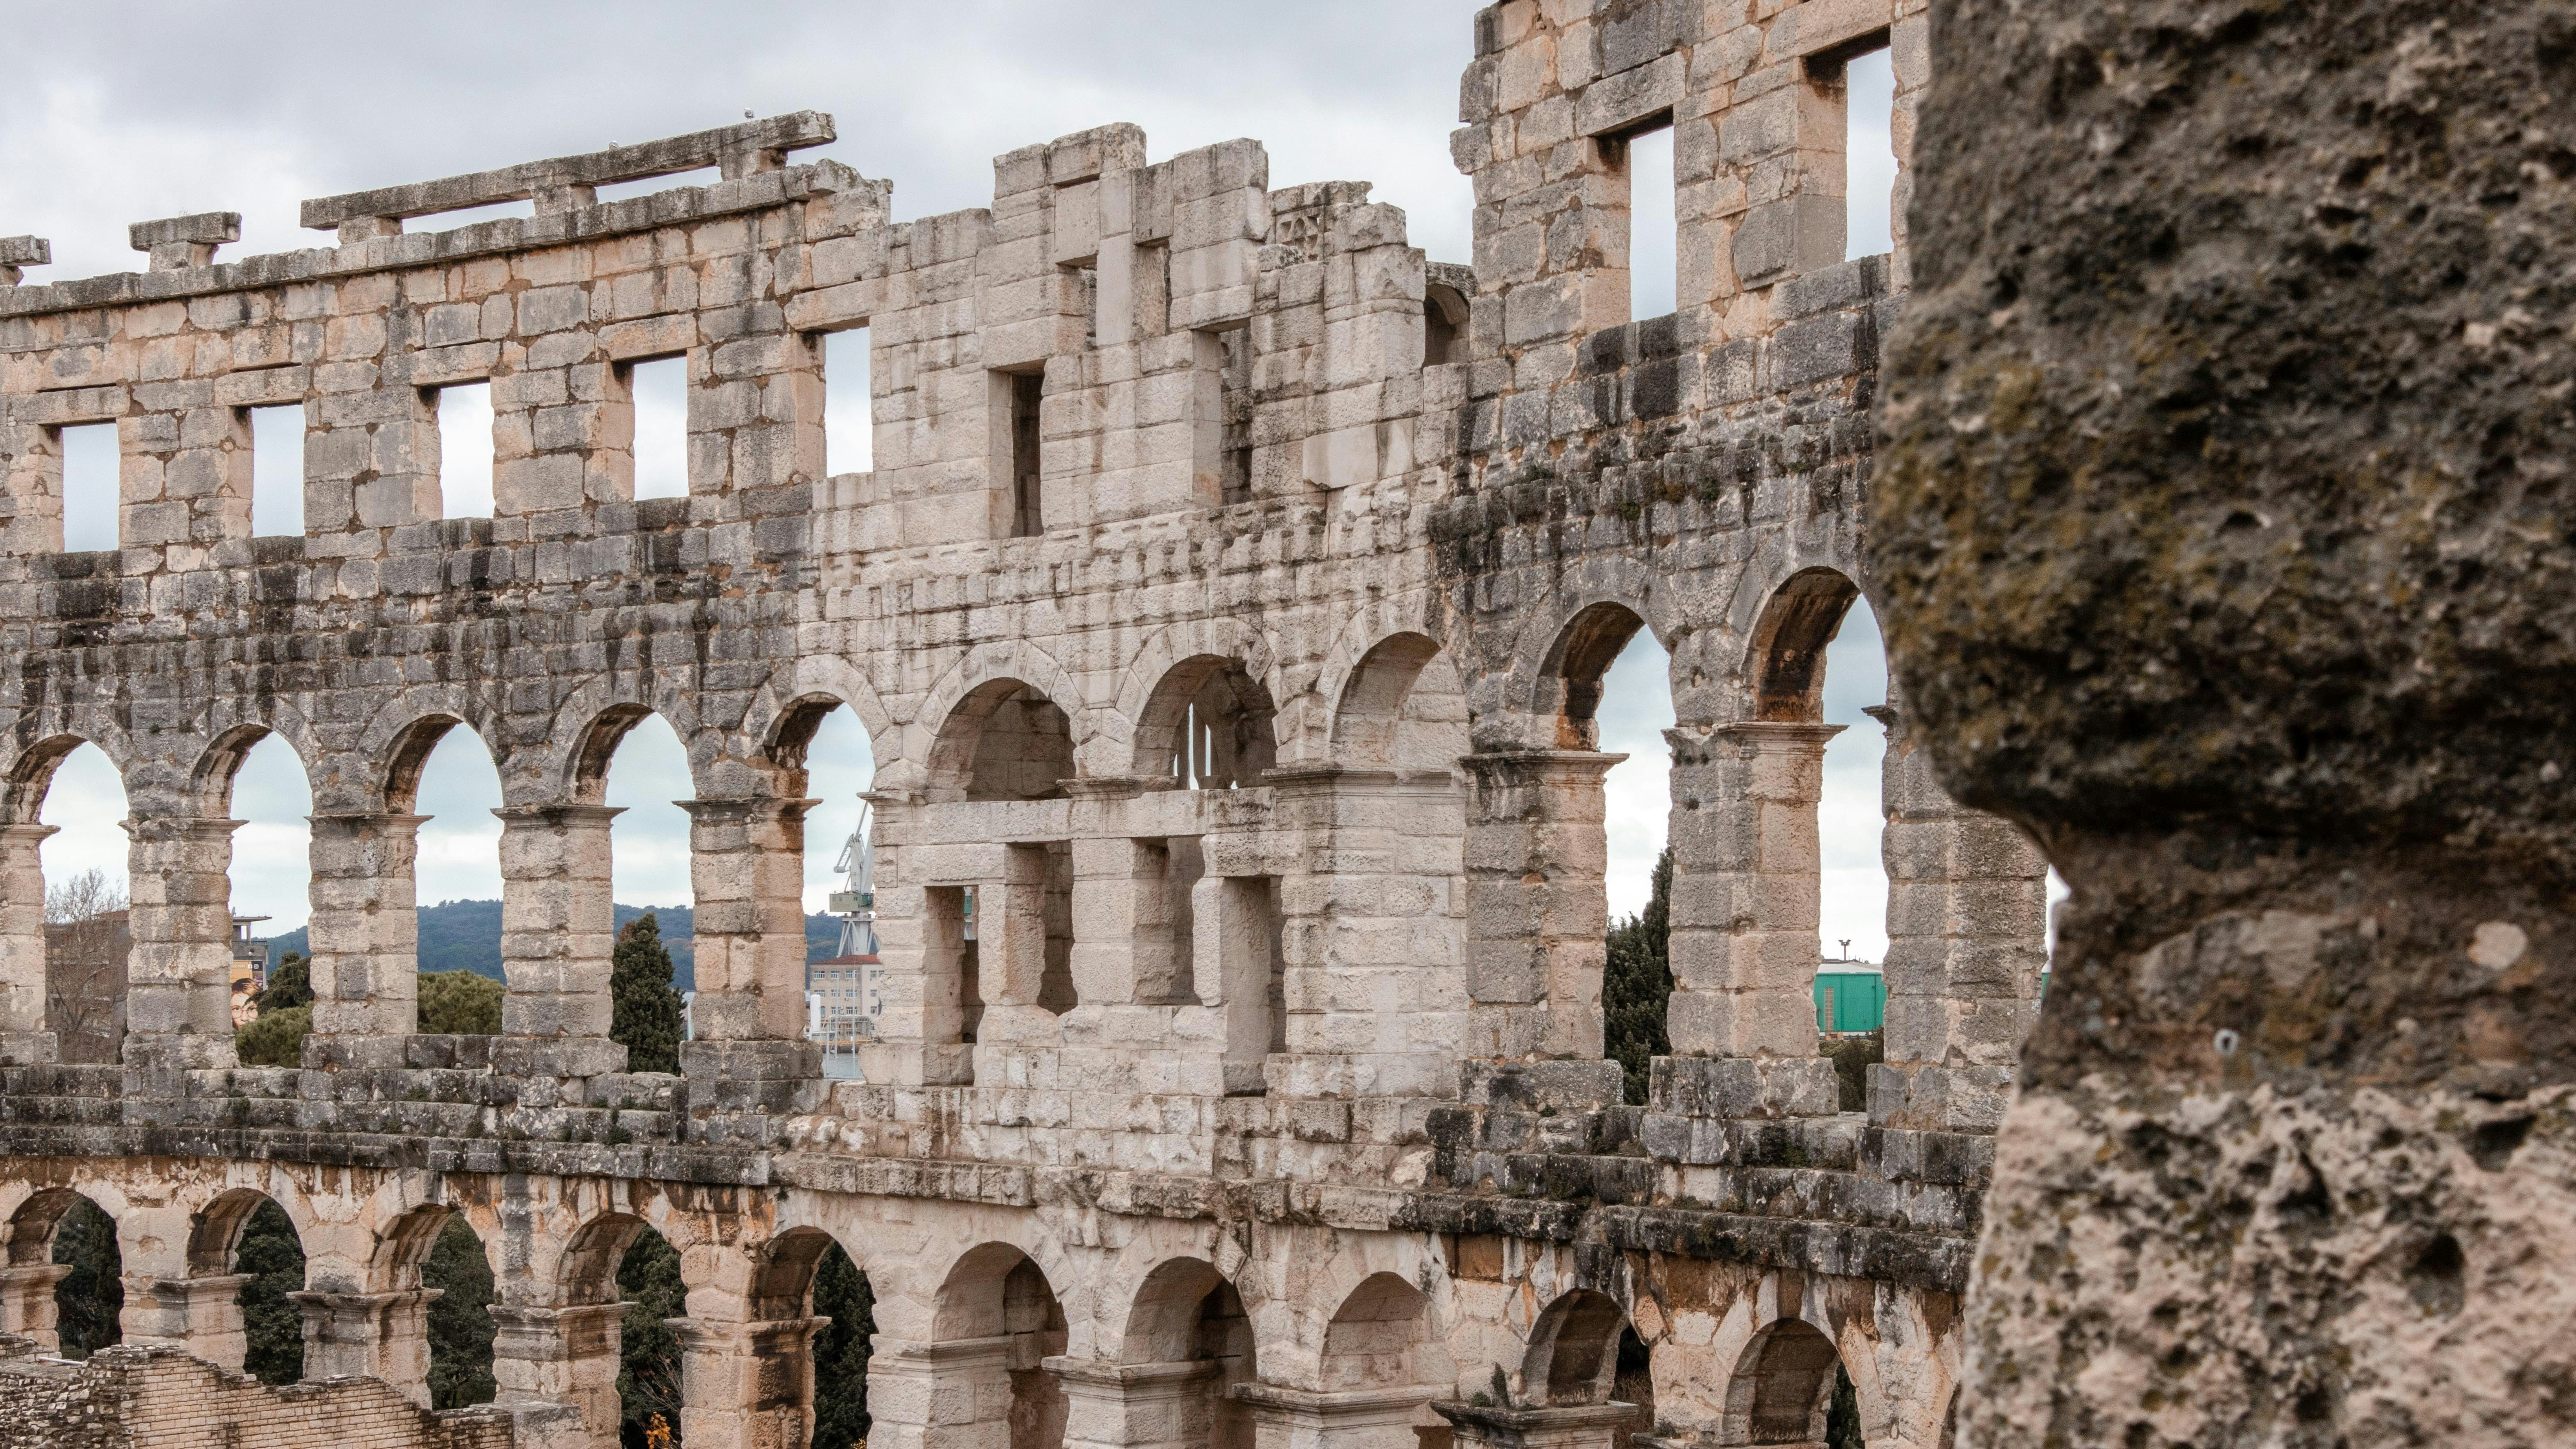 Bryzantine era archways of the ancient Roman Pula Arena in Croatia.